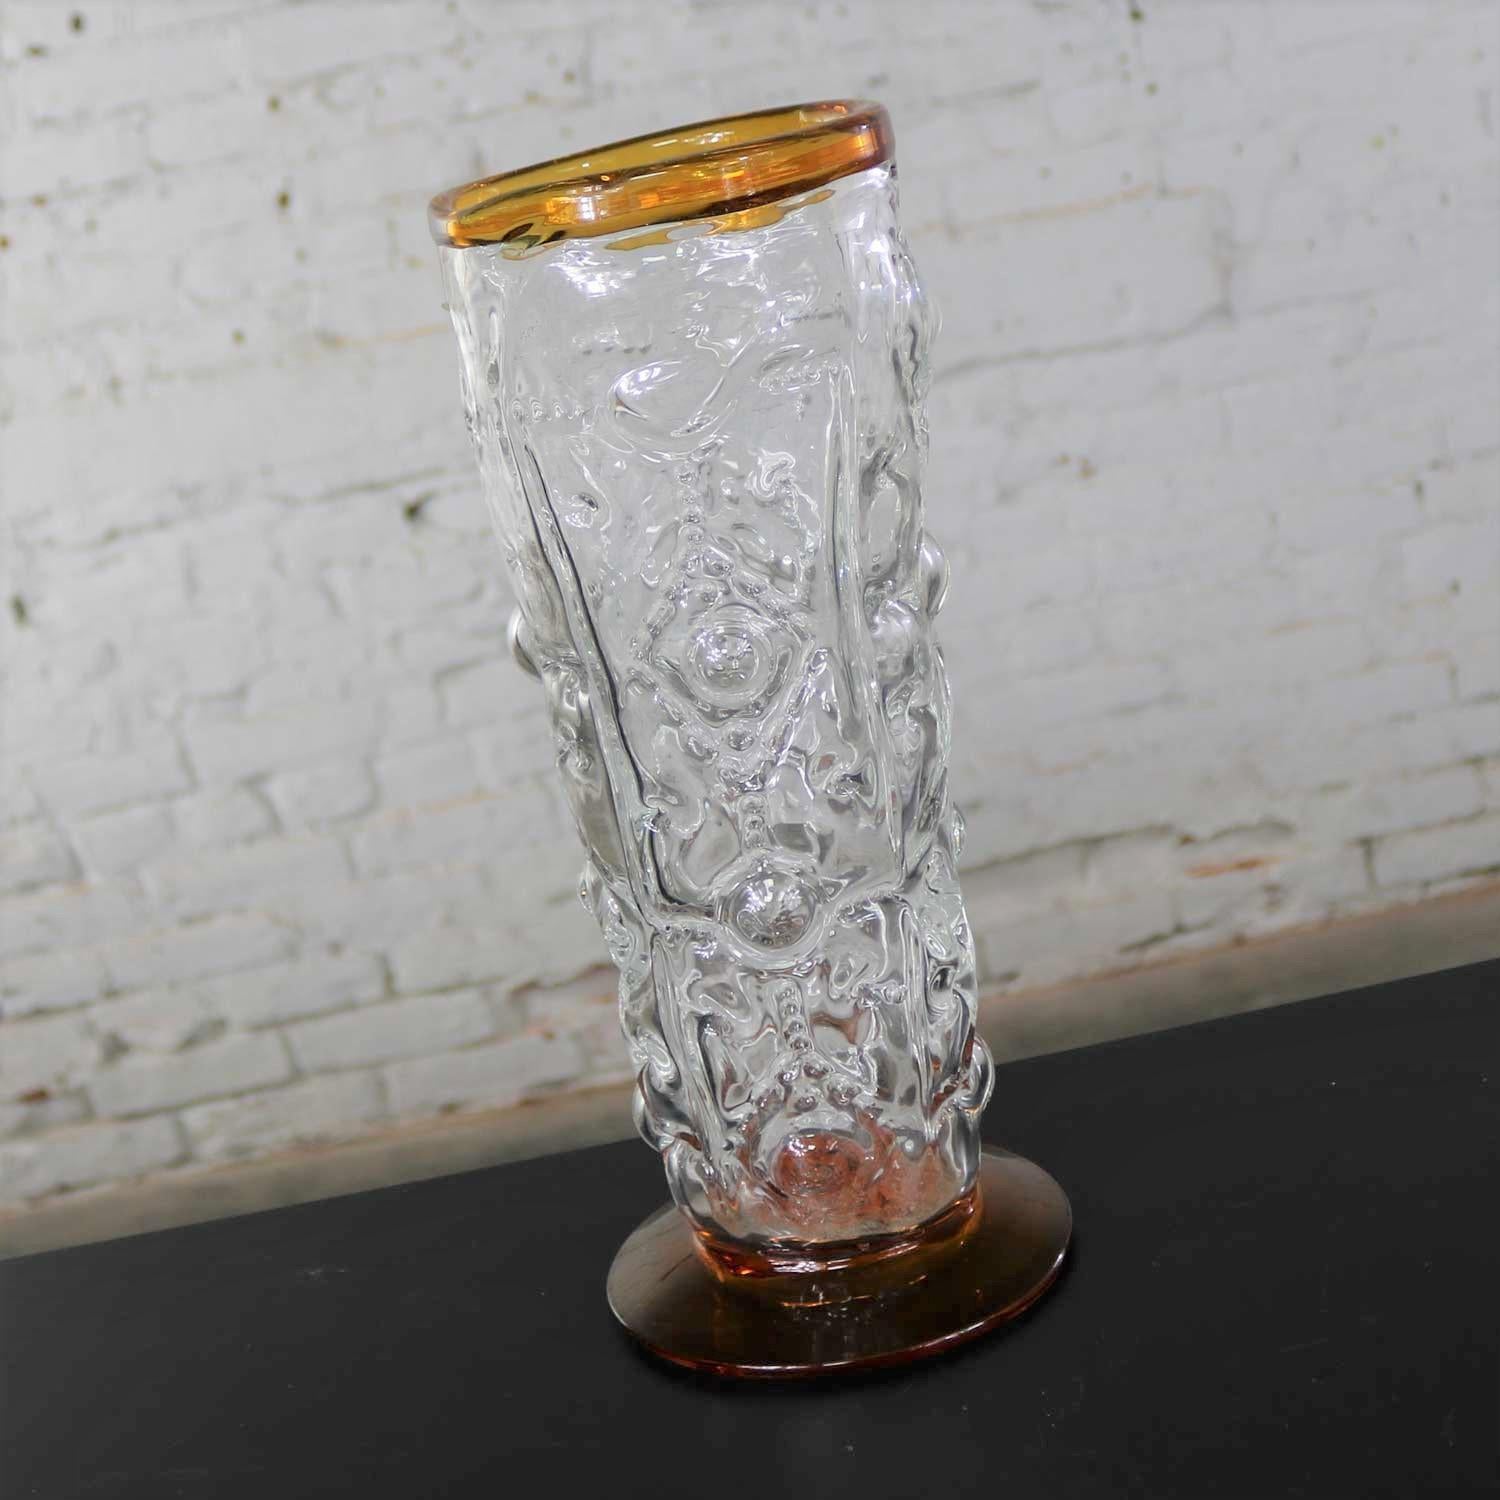 Modern Blenko Hand Blown Glass Vase #9426 in Crystal and Topaz by Hank Adams